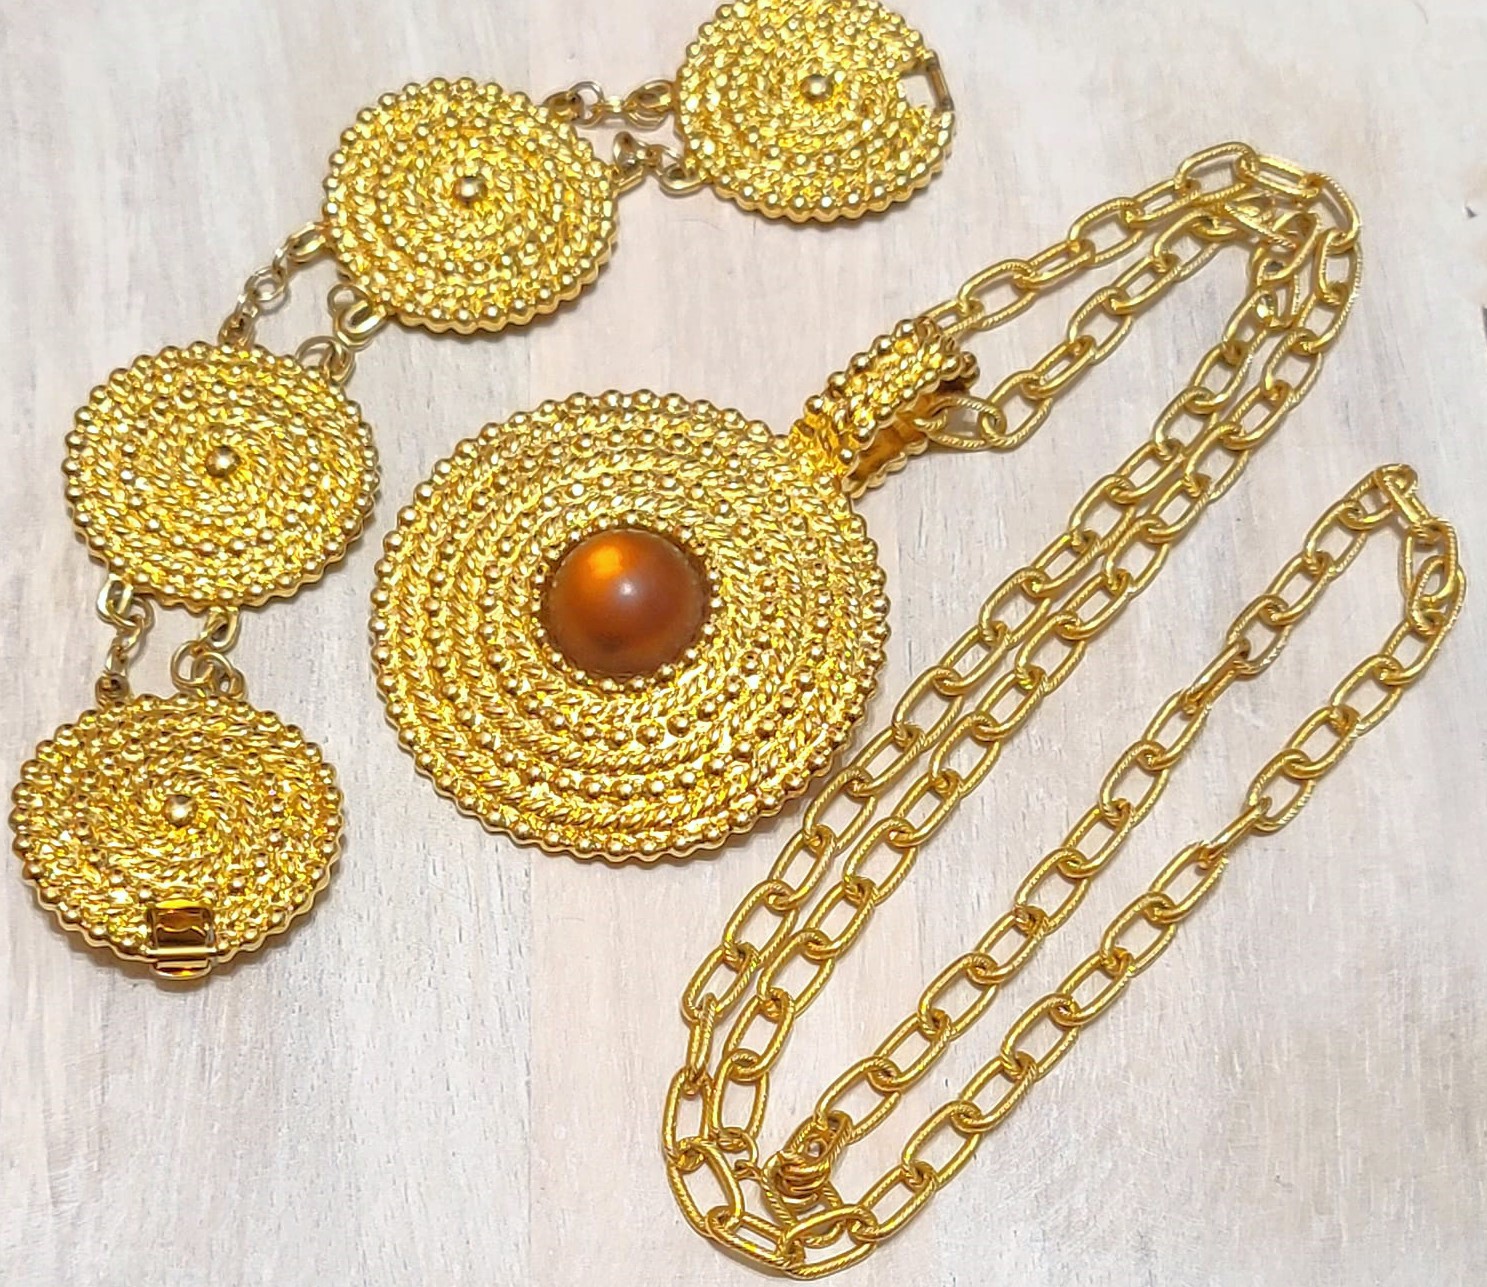 Vintage necklace and bracelet set, goldtone with center cabachon, link style bracelet, statement set